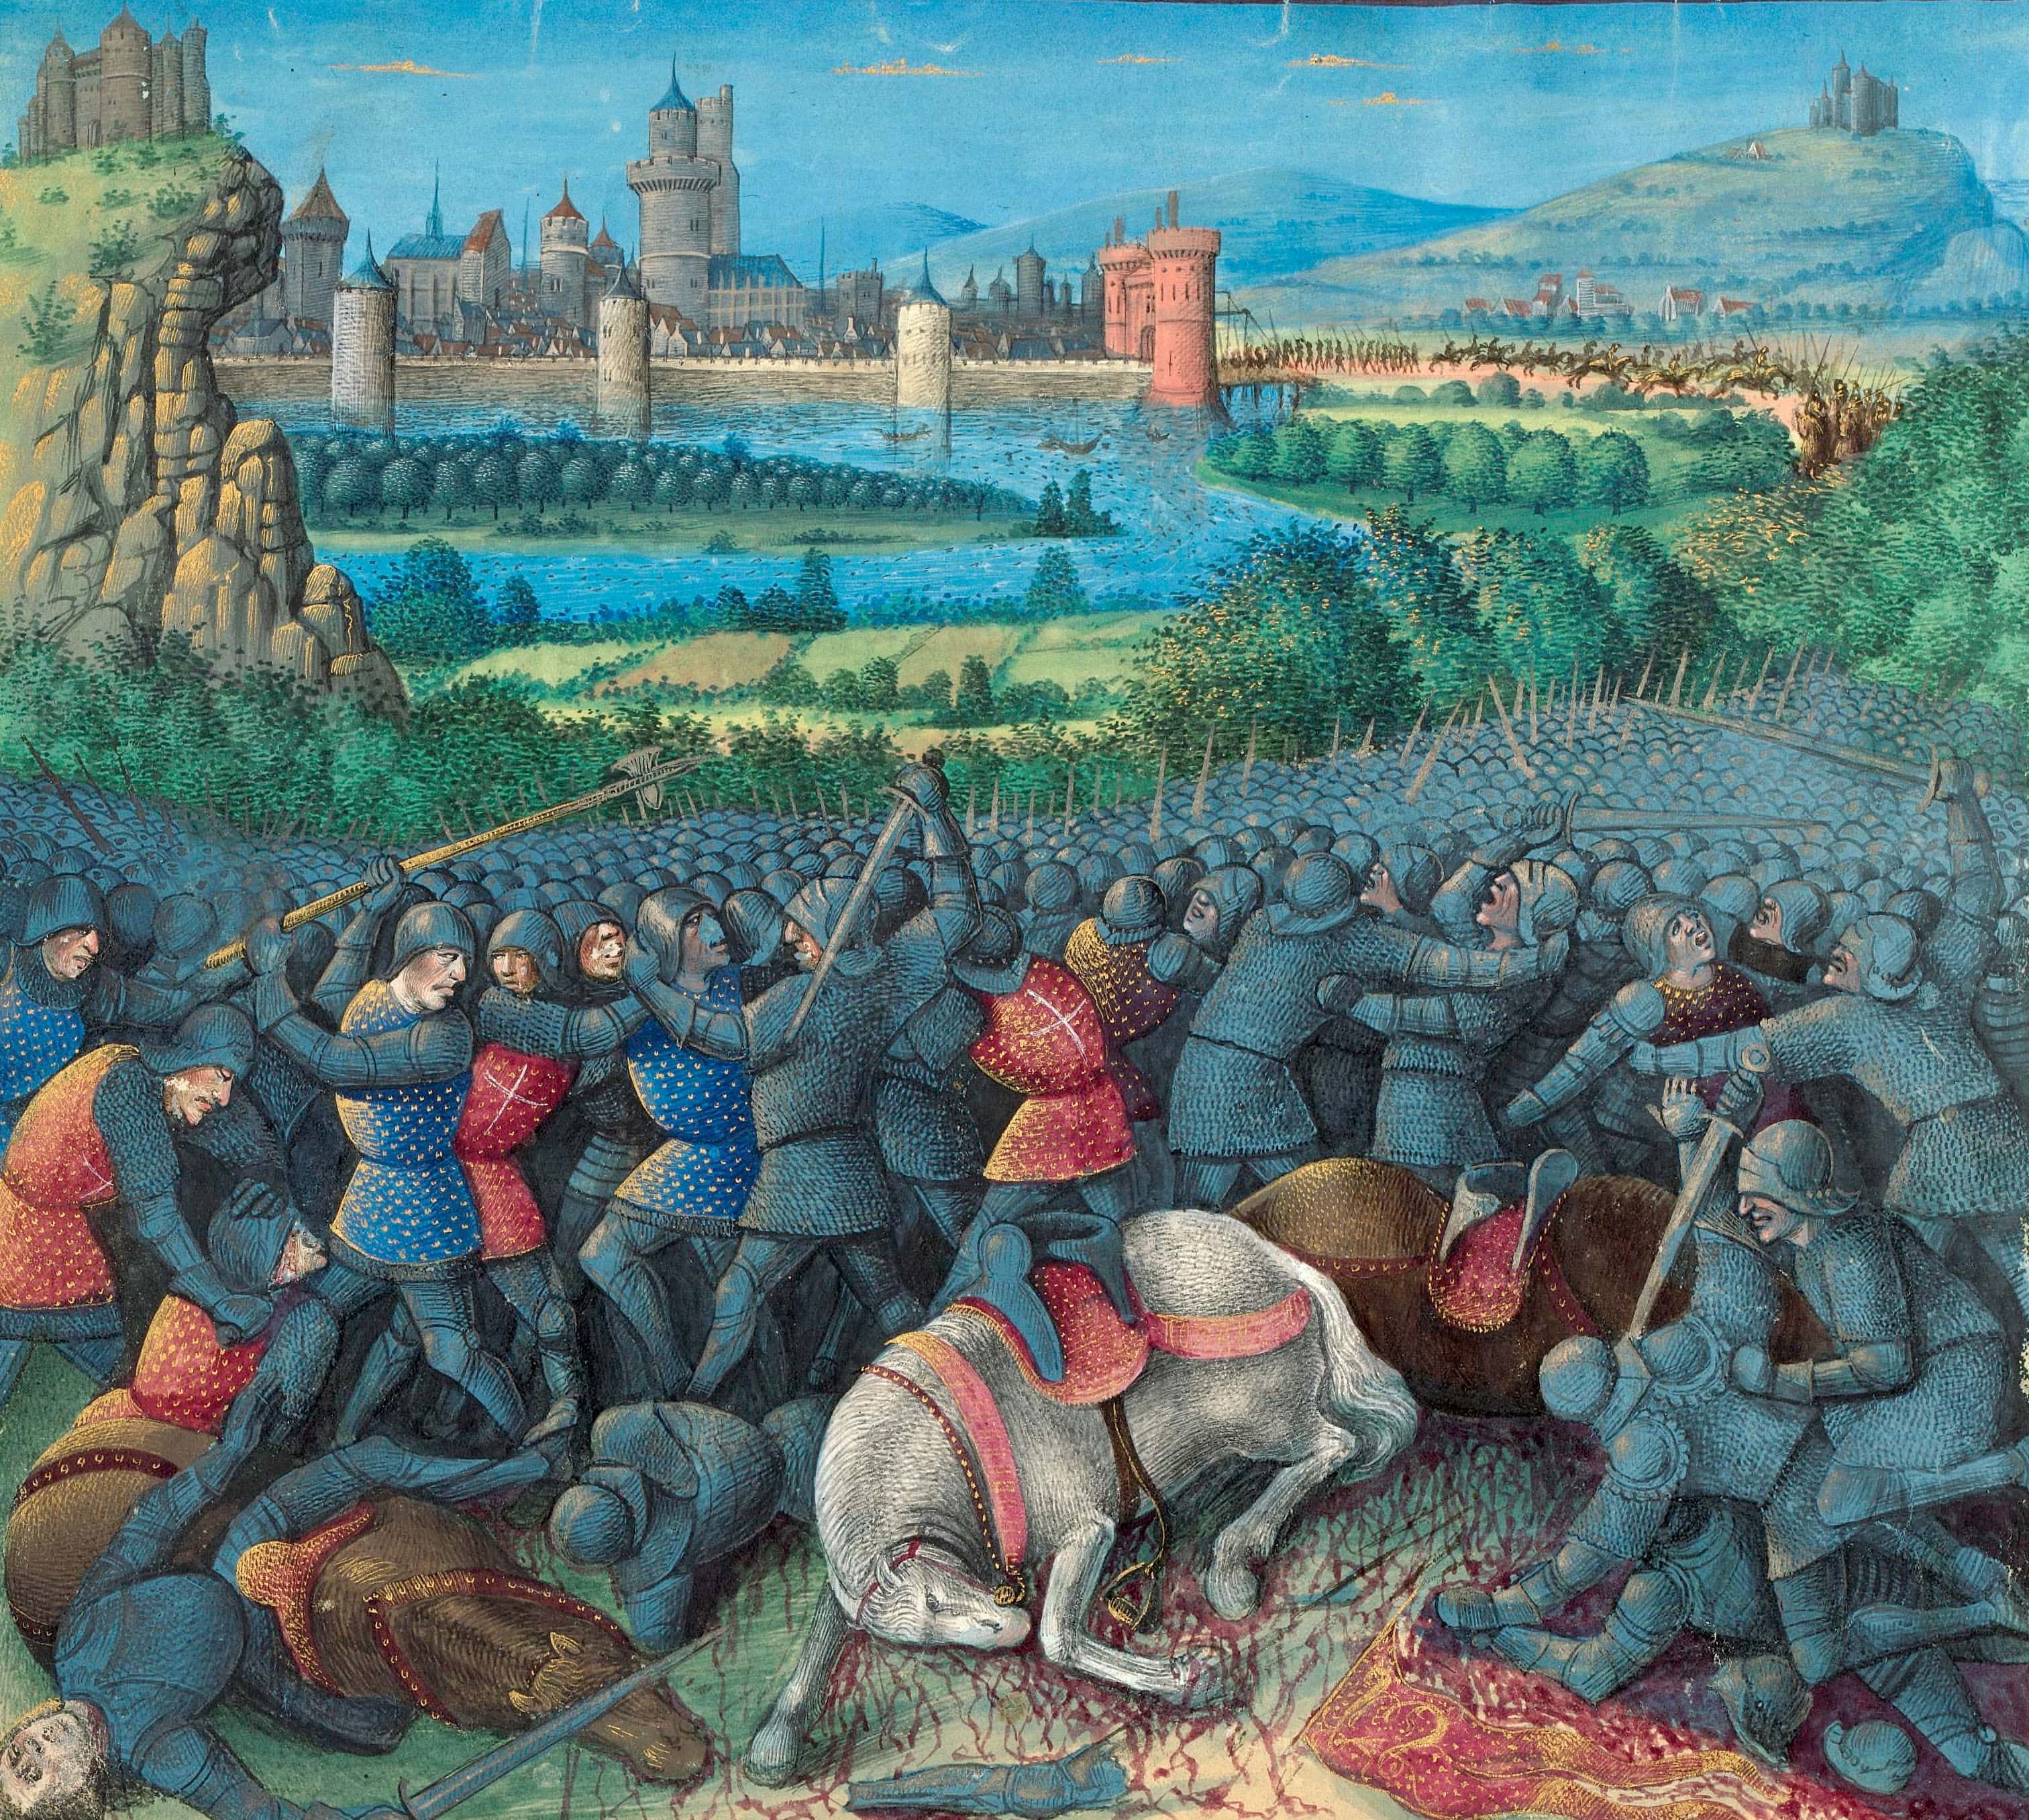 Srednjovekovna armija za krstaške pohode na krvavom putu u Svetu zemlju